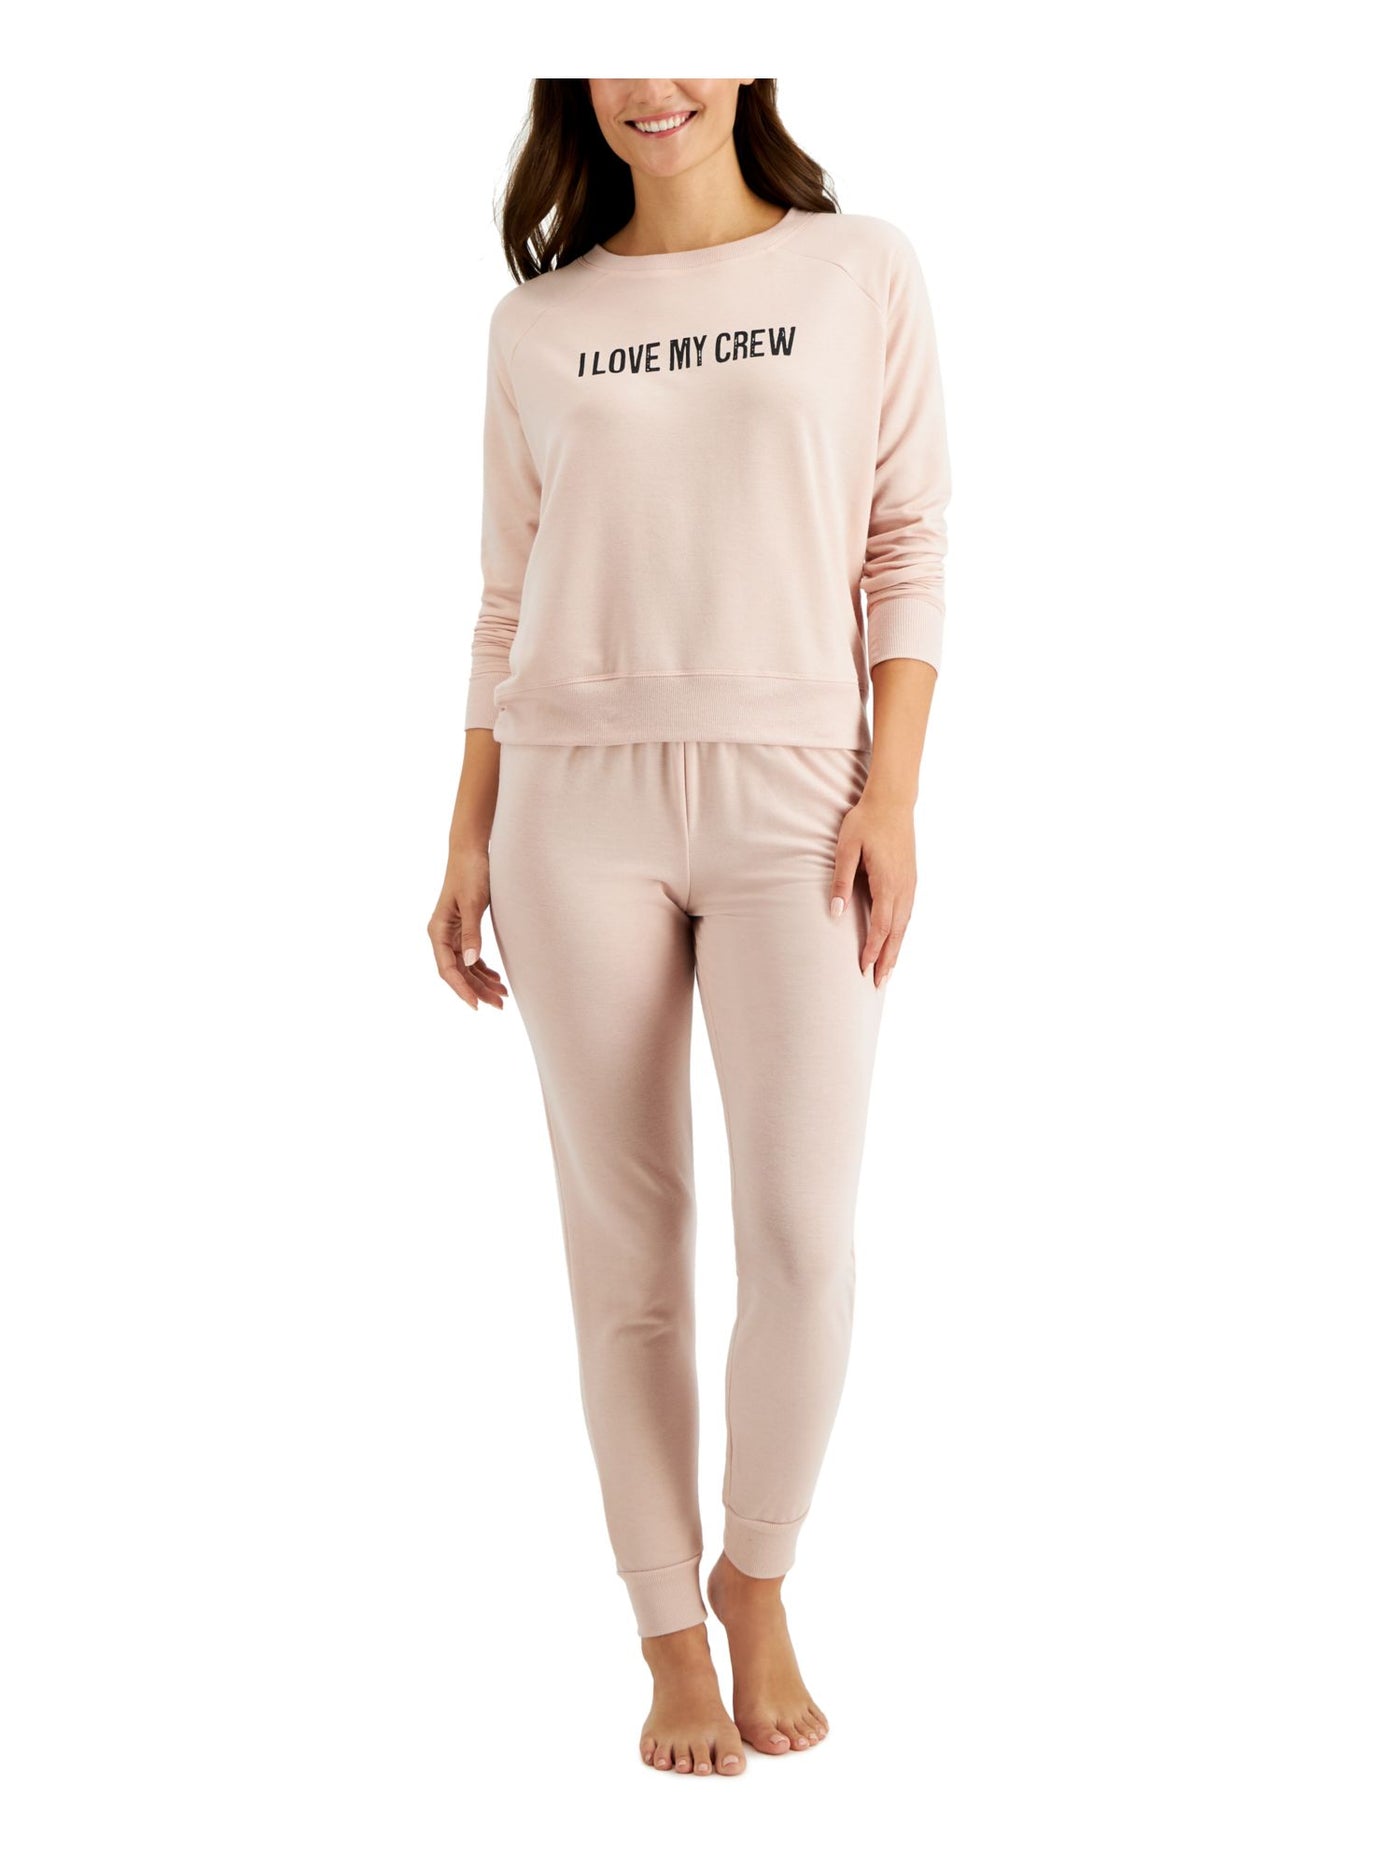 FAMILY PJs Womens Pink Printed Top Long Sleeve Lounge Pants Stretch Pajamas XXL